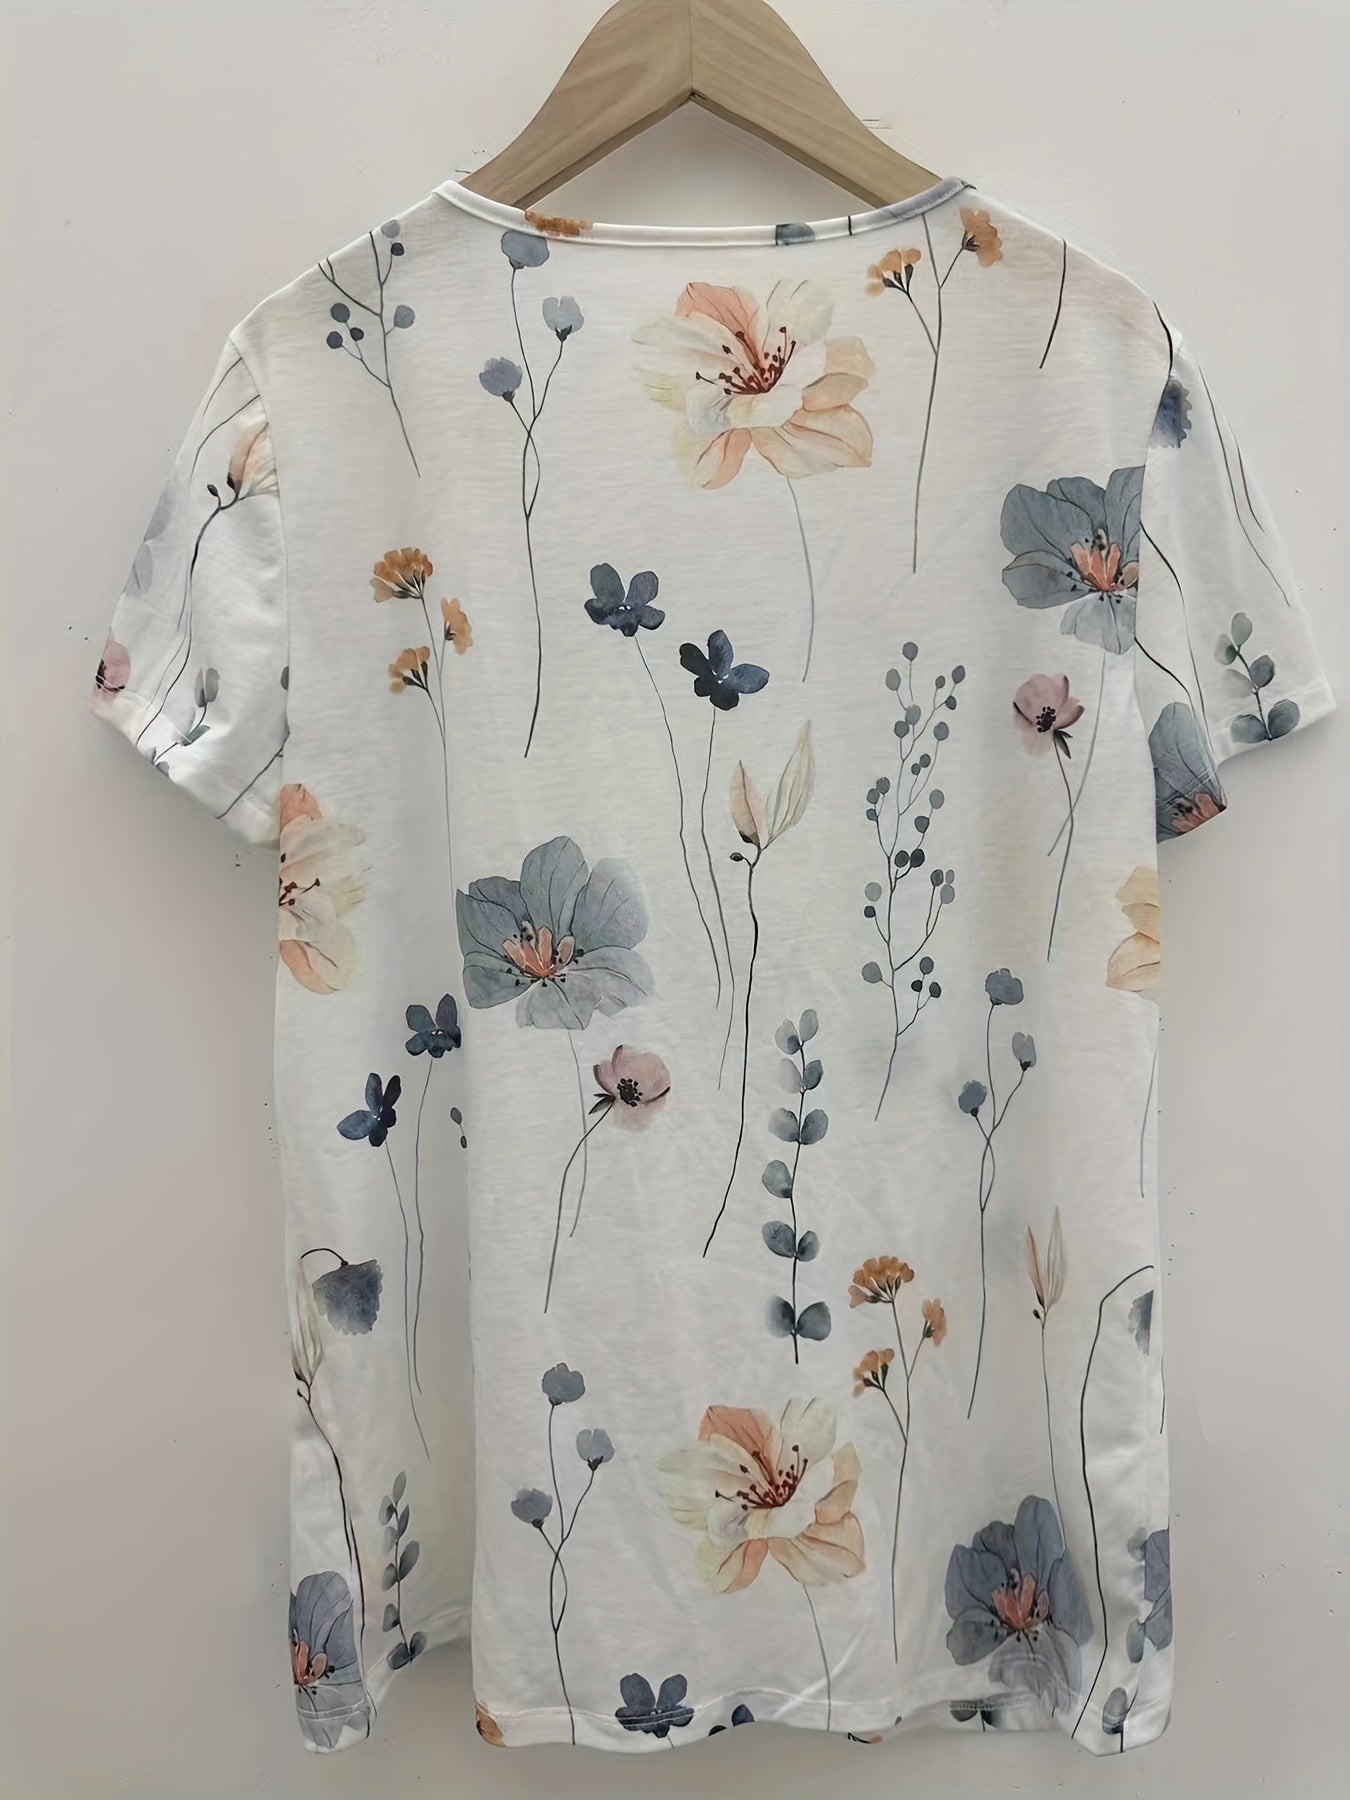 Vzyzv Floral Print Notch Neck T-Shirt, Casual Short Sleeve T-Shirt For Spring & Summer, Women's Clothing